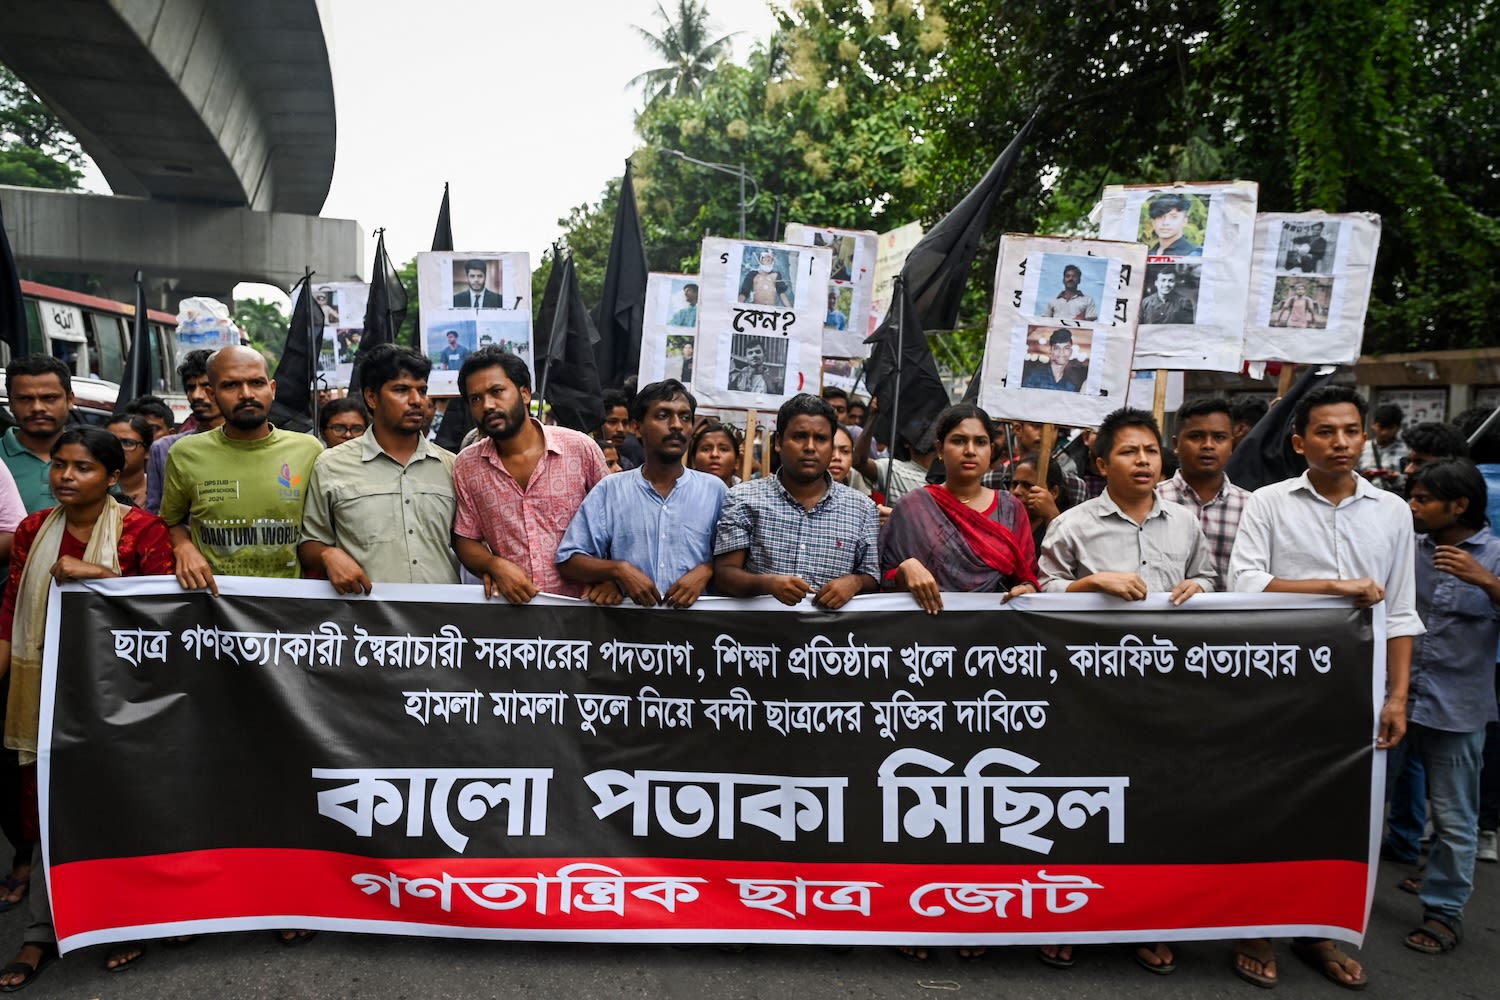 Bangladesh Protests Lead to Port Backlogs, Weeklong Berthing Delays